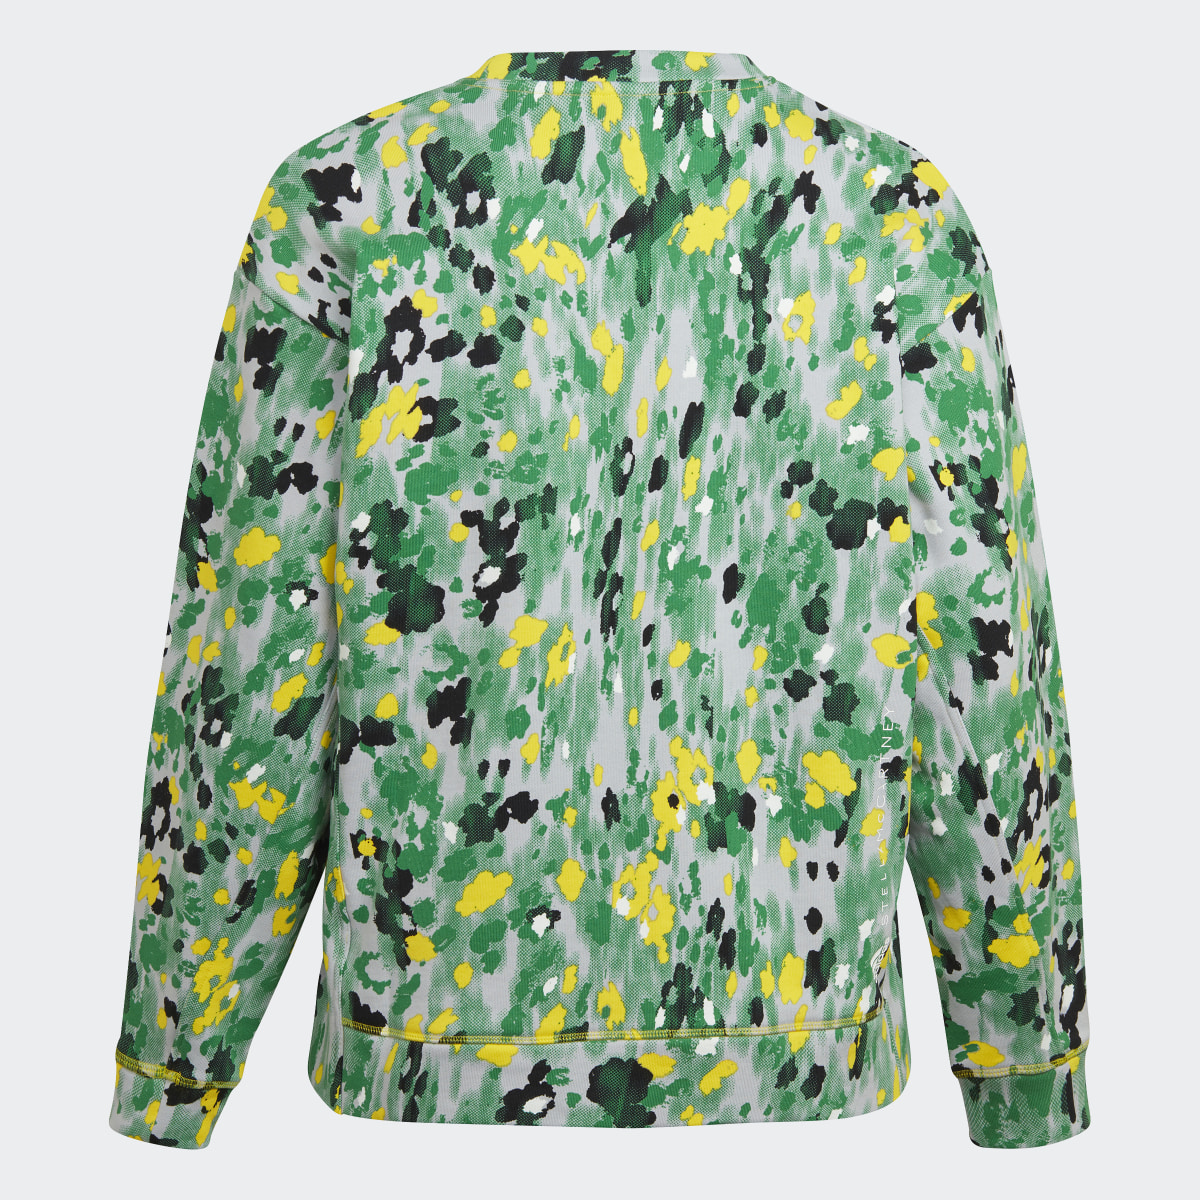 Adidas by Stella McCartney Floral Print Sweatshirt - Plus Size. 7